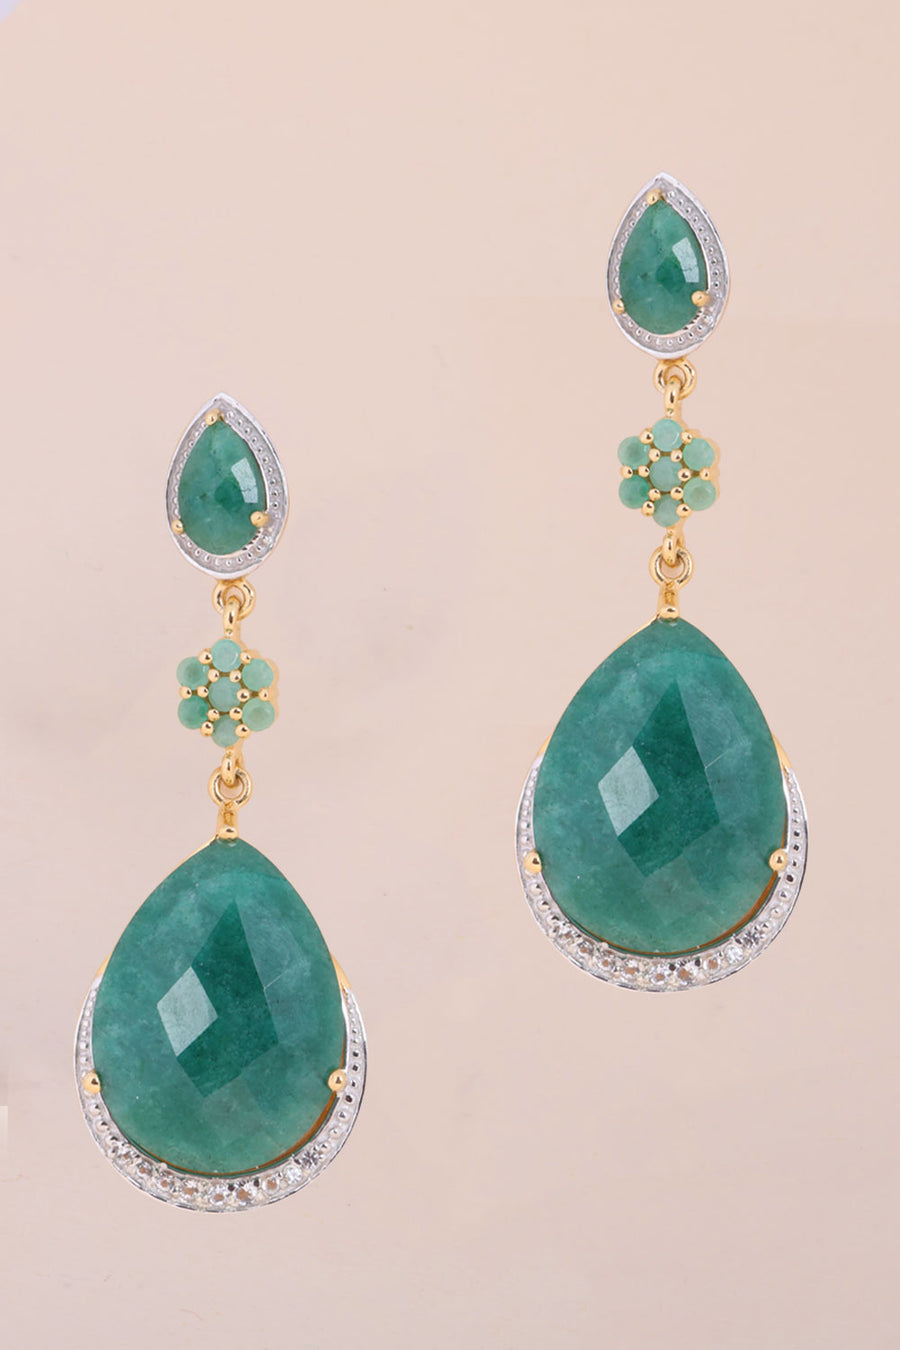 Emerald Flat Briolite, Sakota Emerald, White Topaz Sterling Silver Drop Earing - Avishya